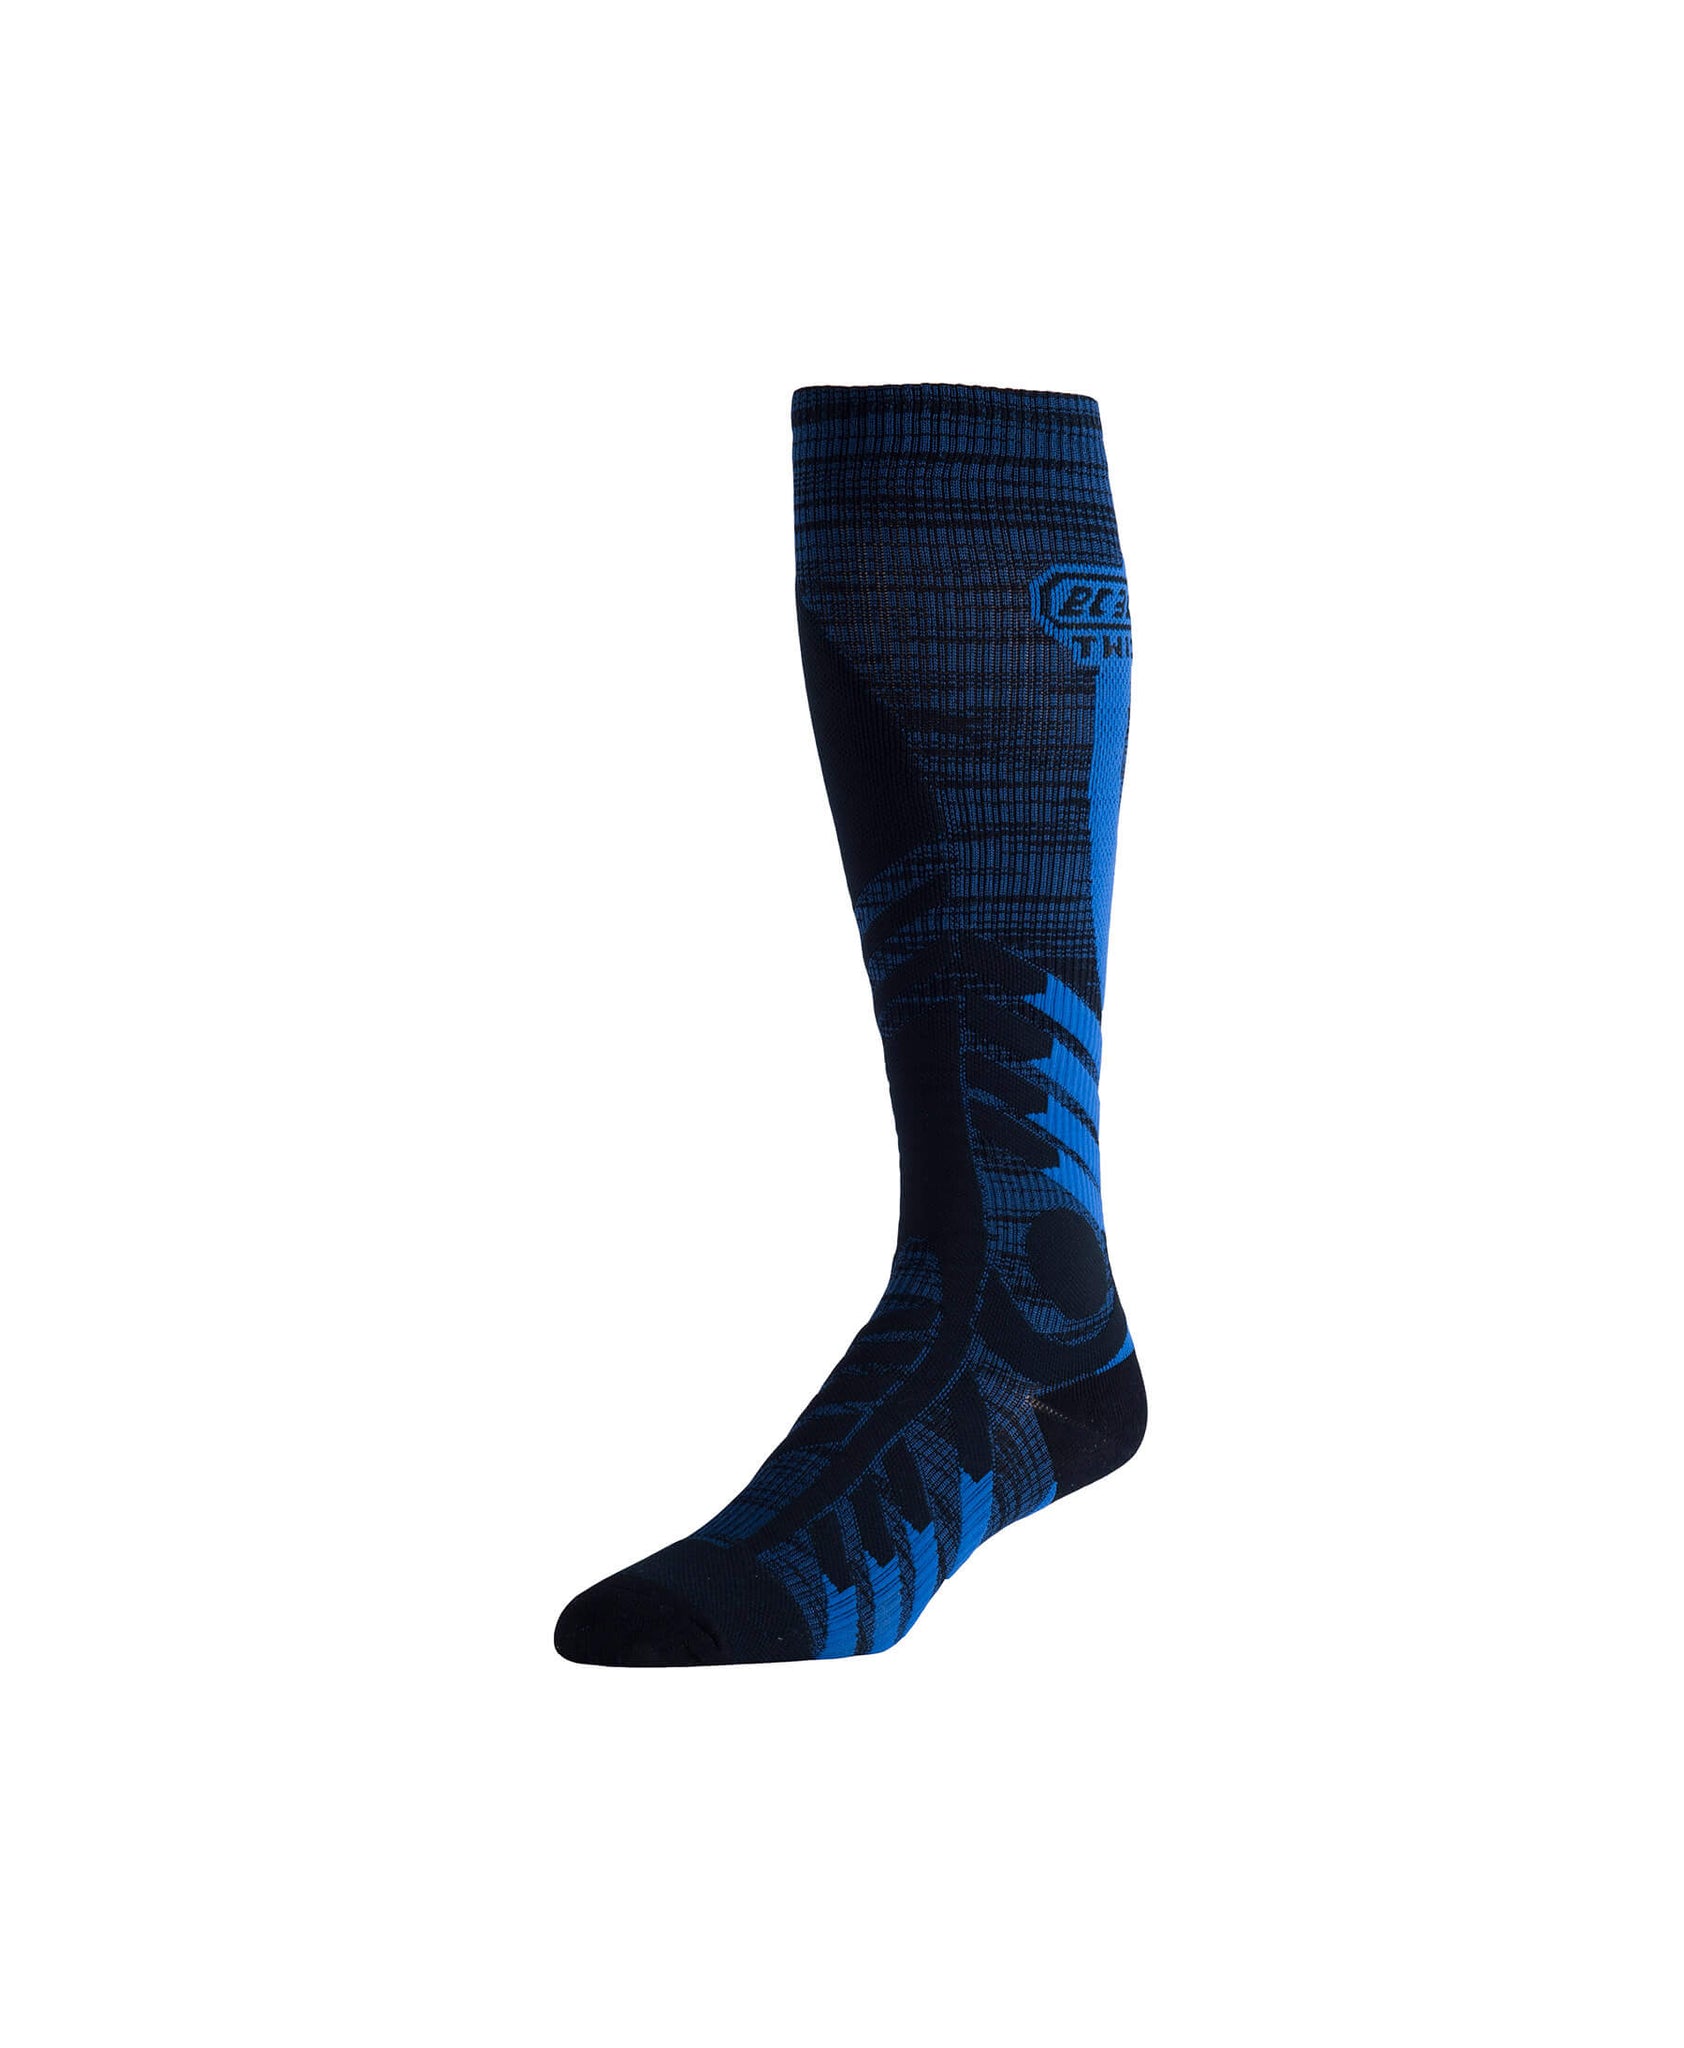 Bas De Compression Twist - Noir/Bleu||Twist Compression Socks - Black/Blue